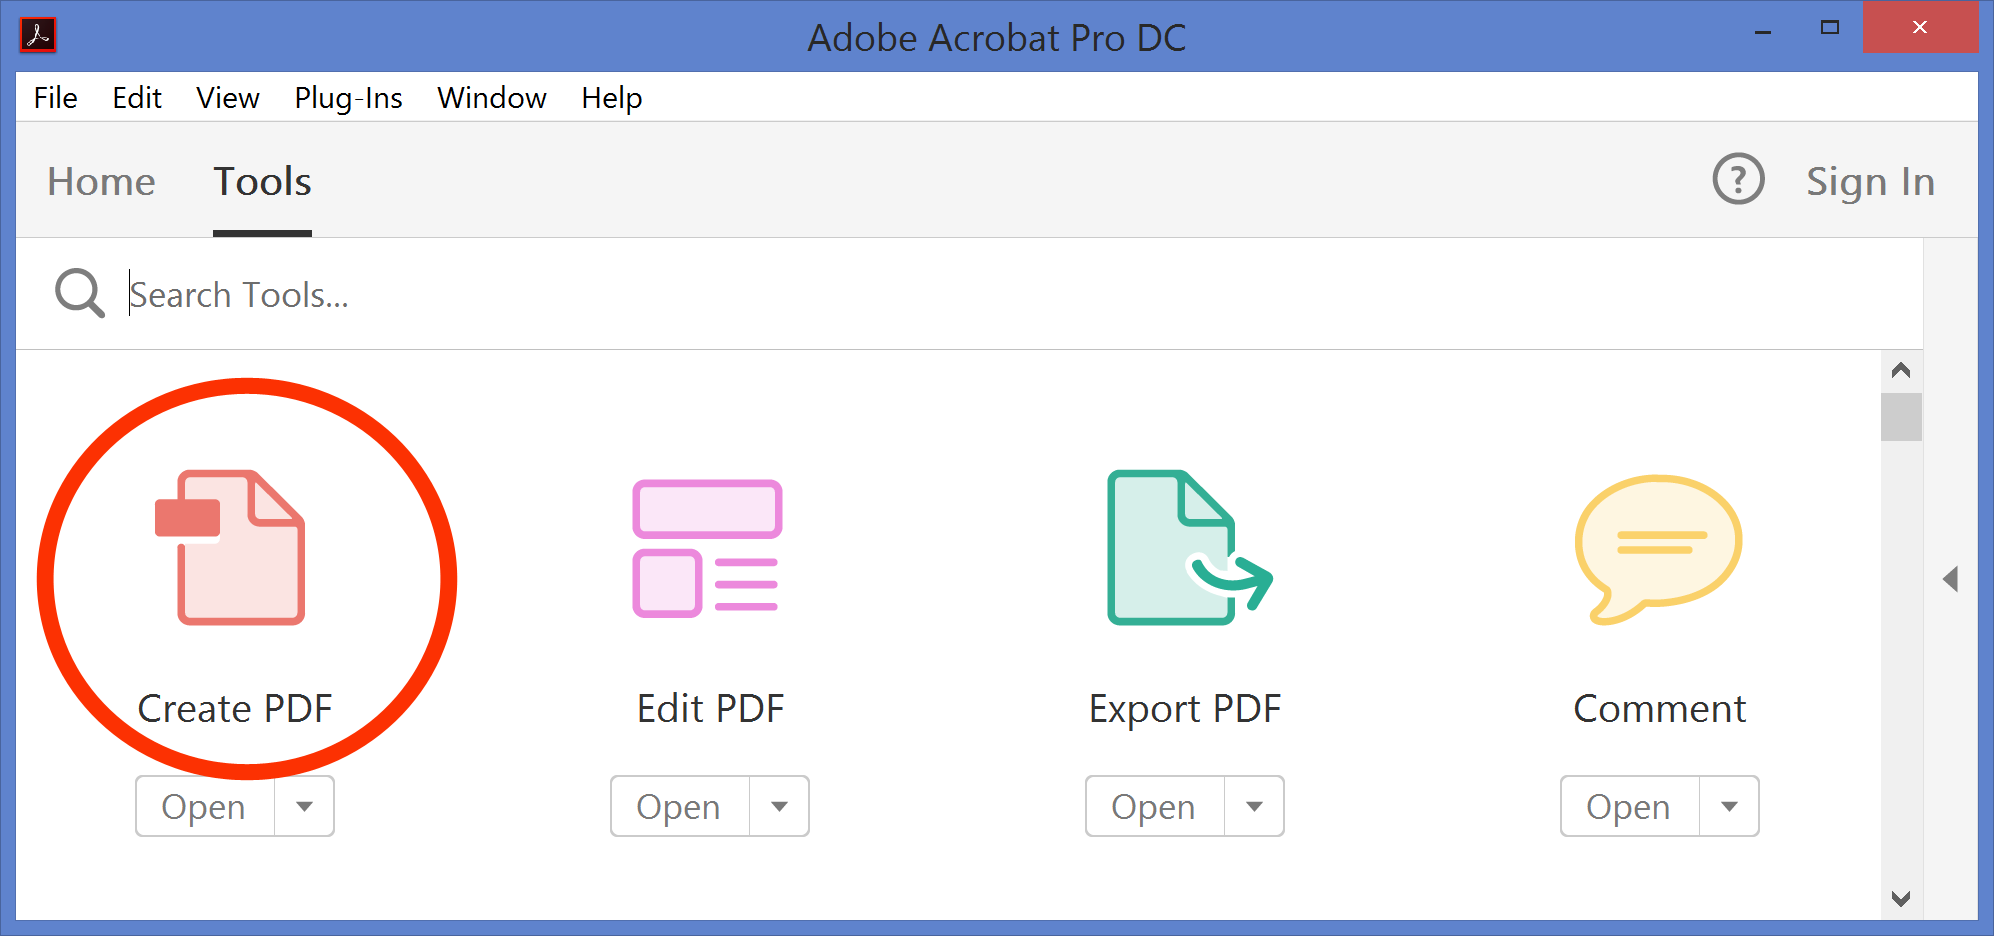 Select Create PDF tool